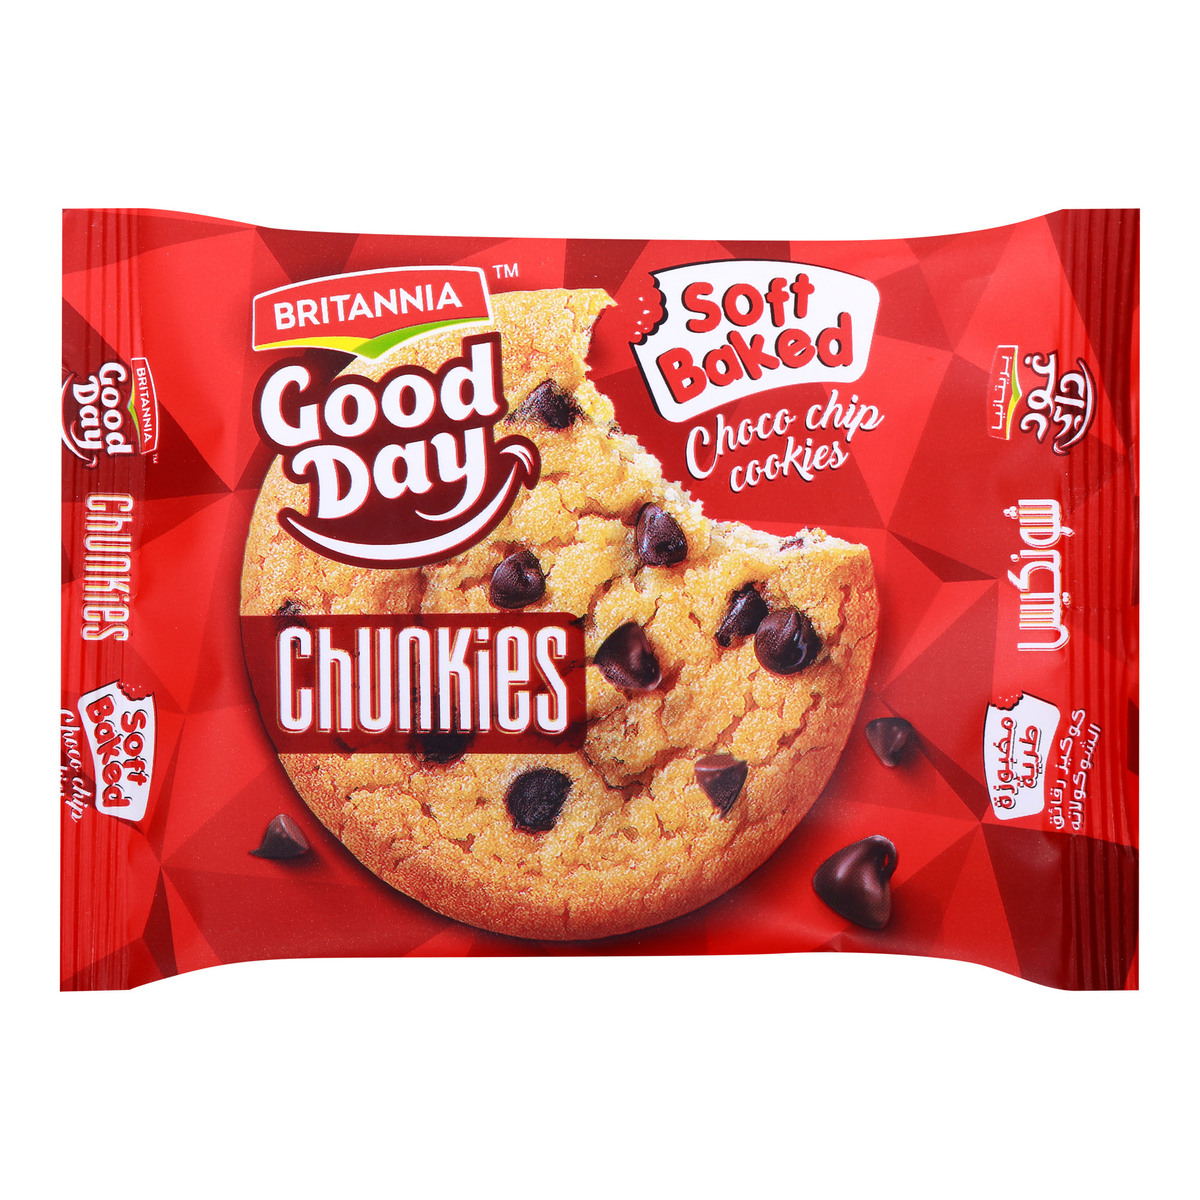 Britannia Good Day Soft Baked Choco Chip Cookies, 8 x 28 g